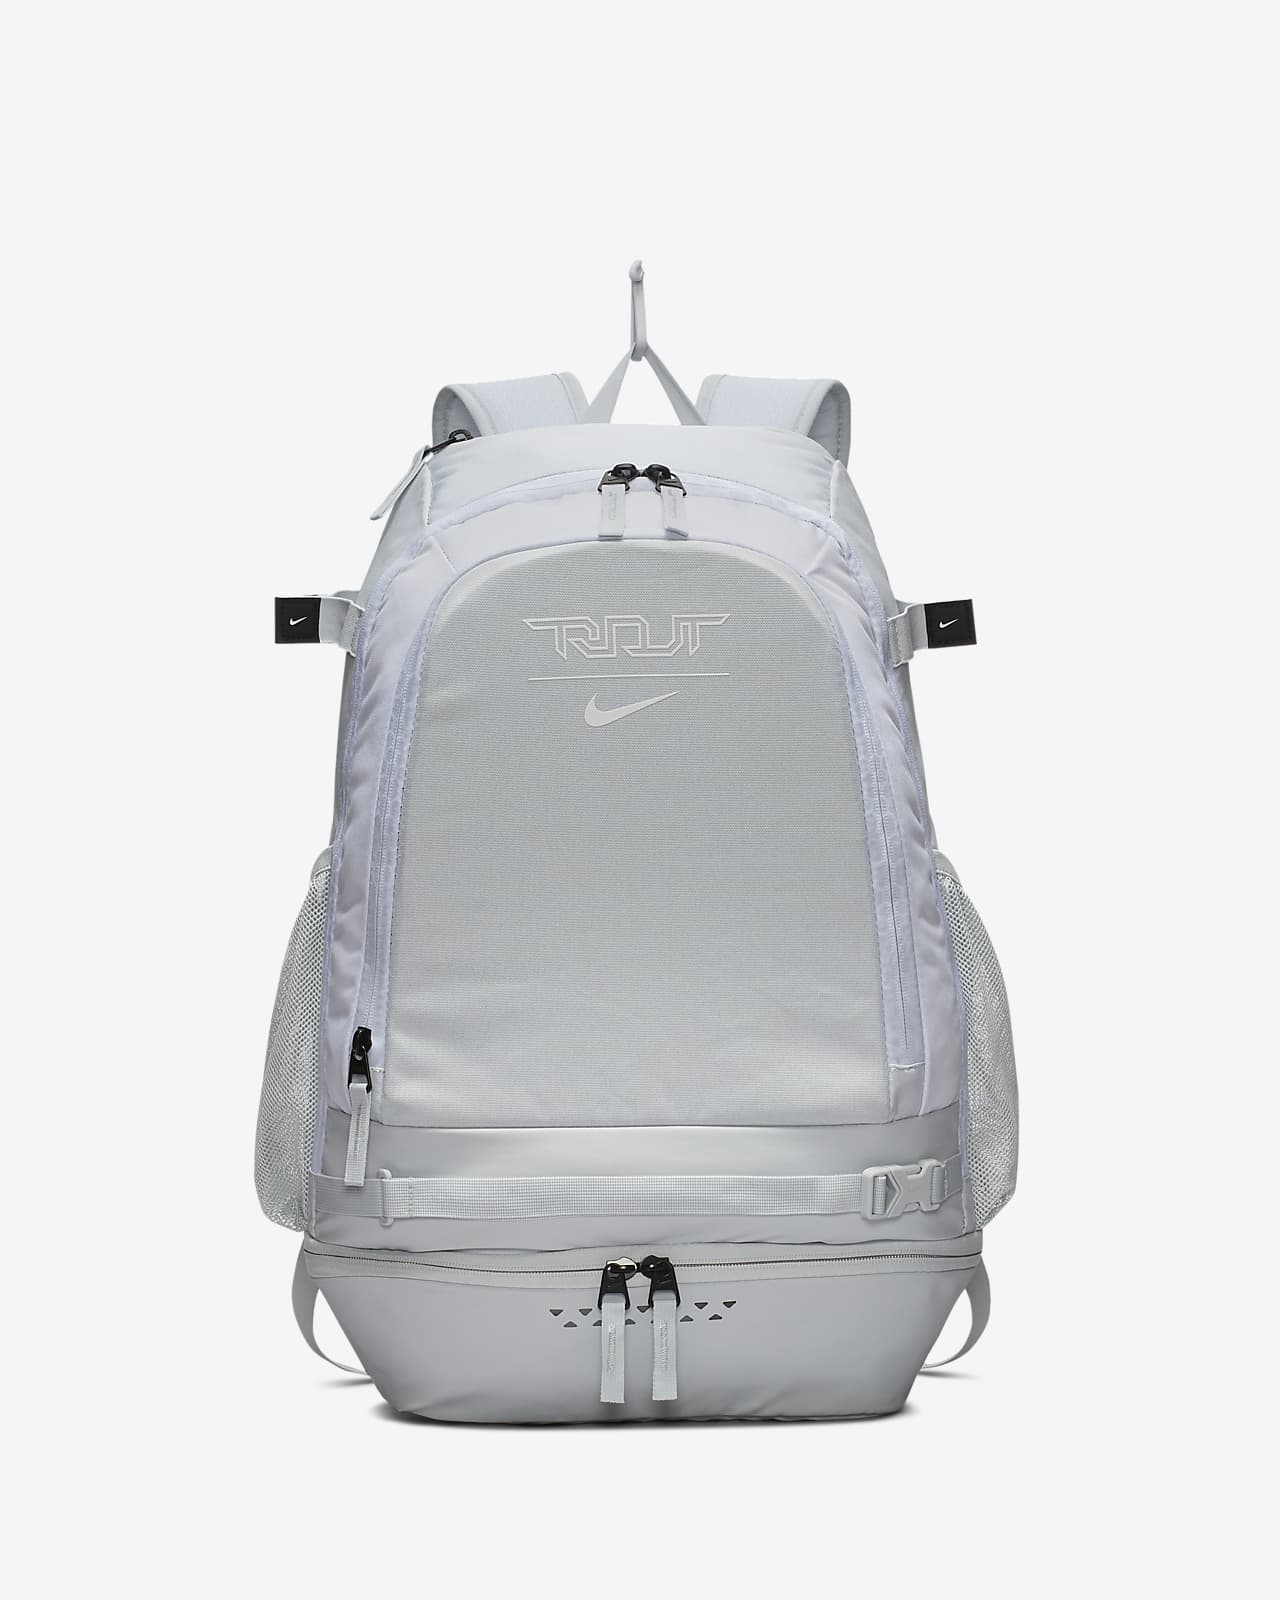 Nike Trout Vapor Baseball Backpack